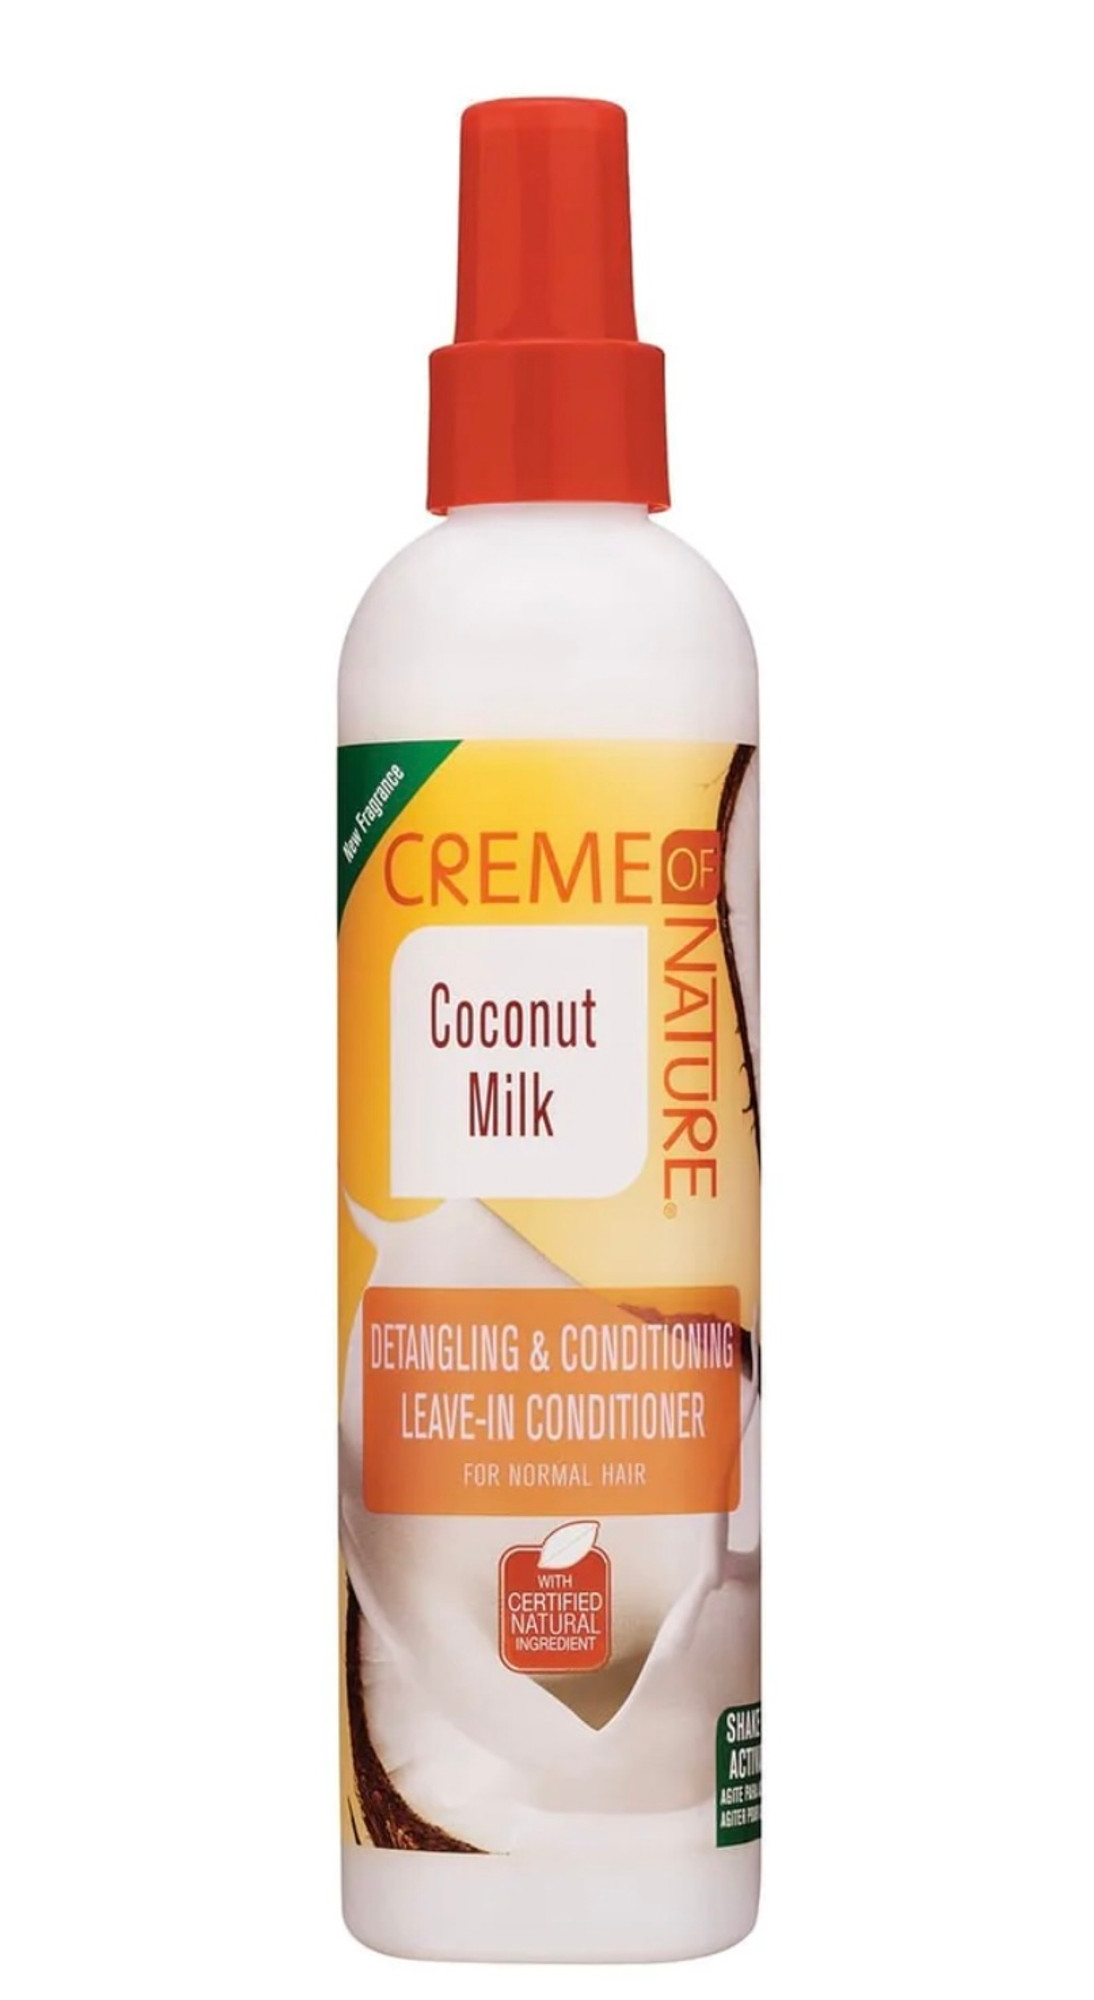 Creme of Nature Coconut Milk Detangling Leave-In Conditioner